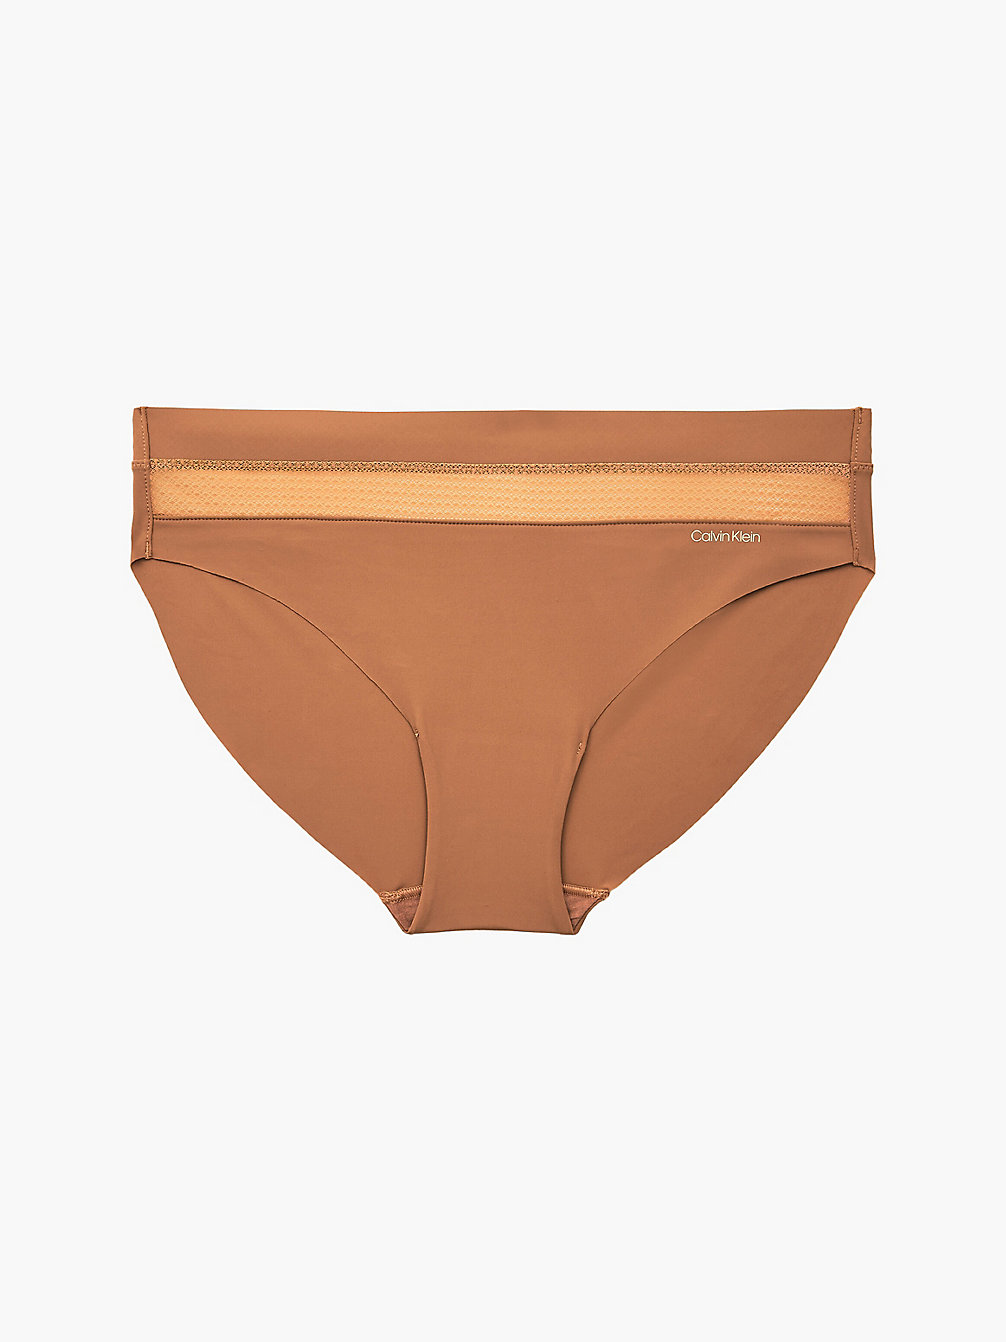 SANDALWOOD Slip Bikini - Perfectly Fit Flex undefined donna Calvin Klein